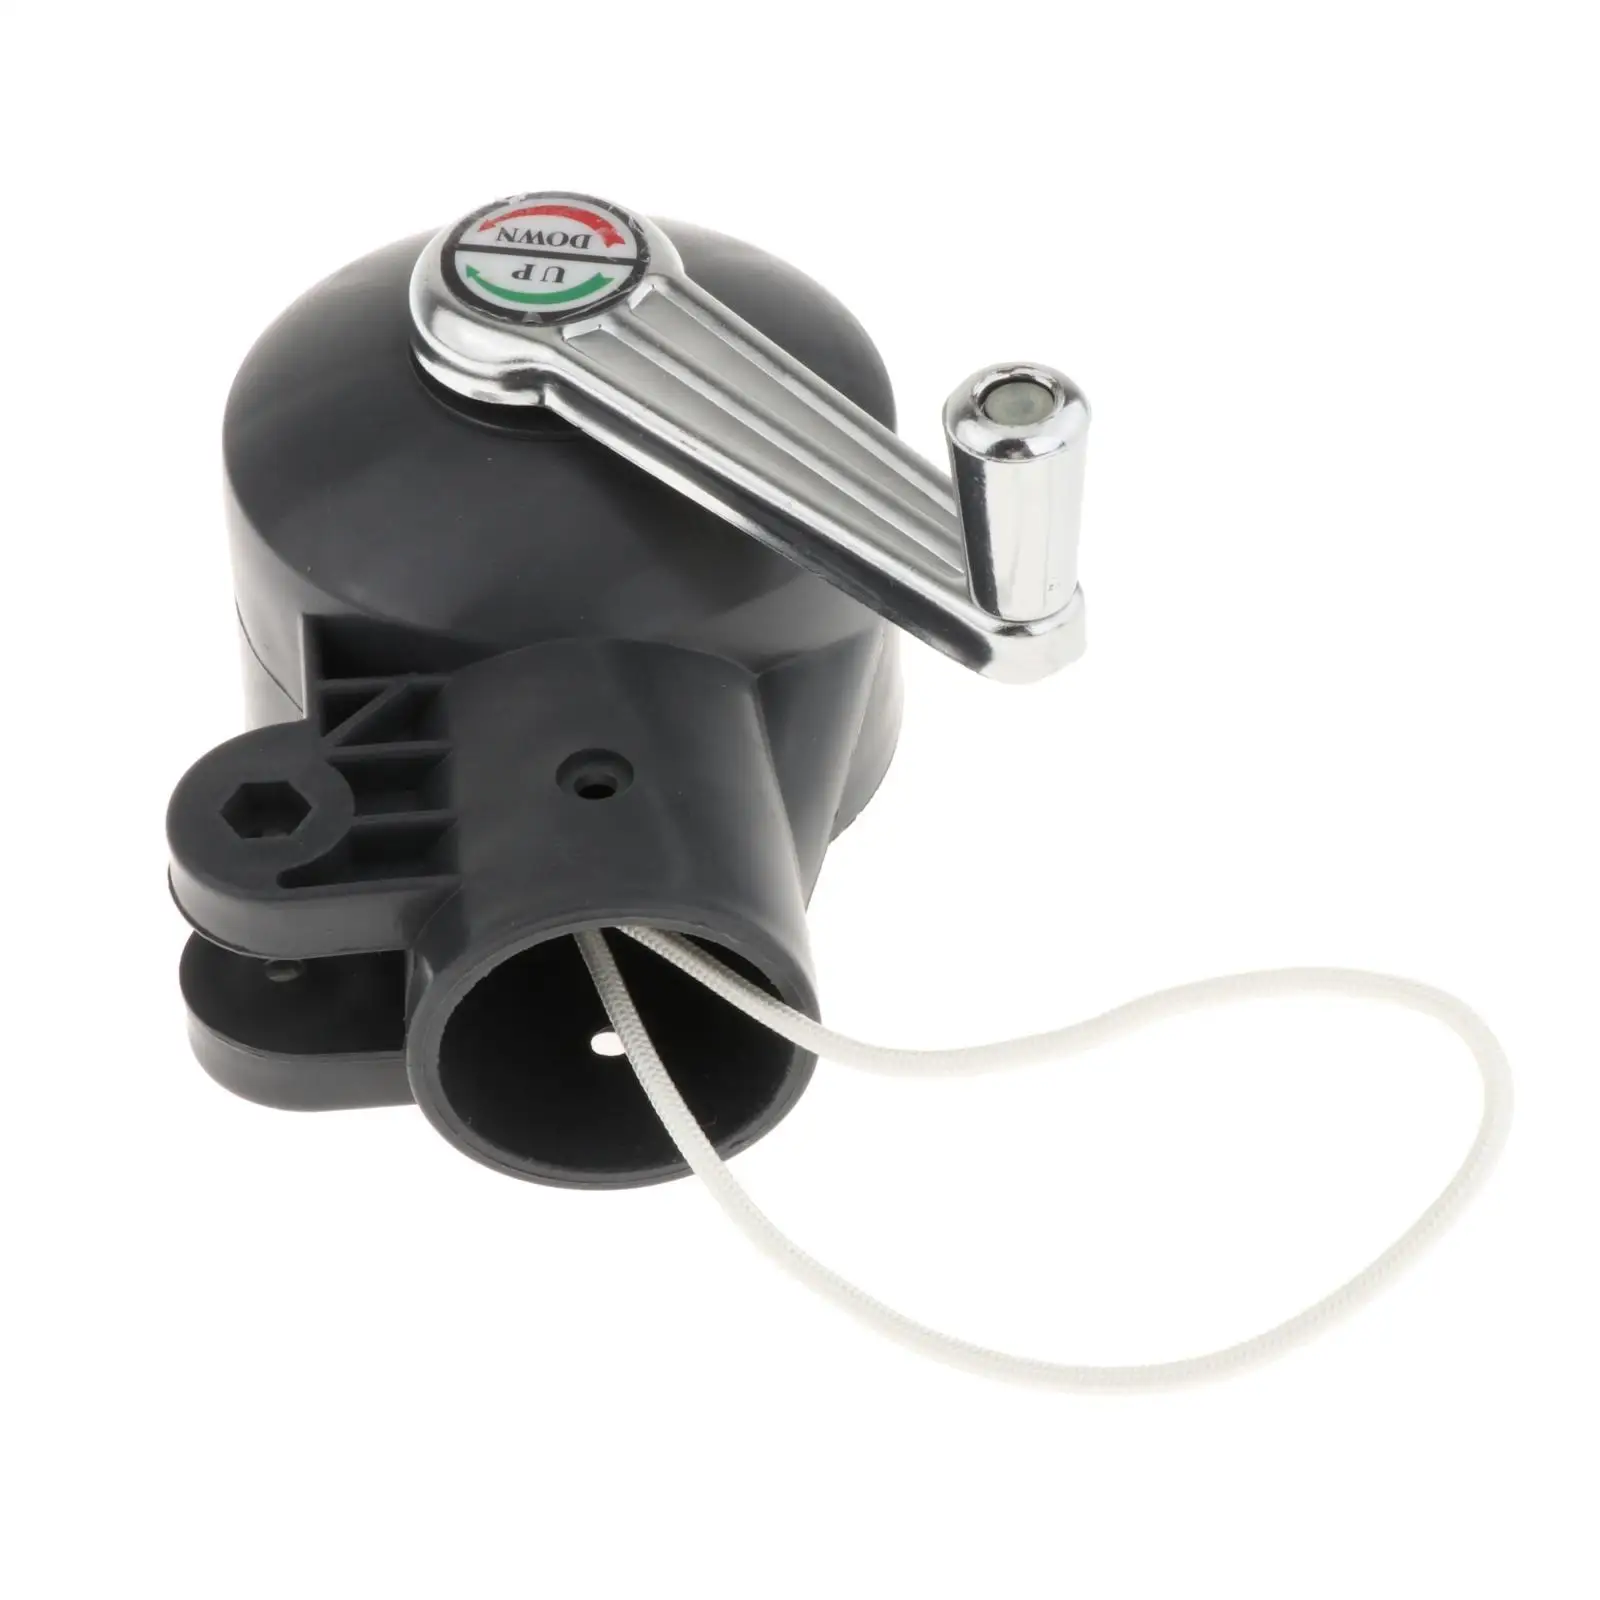 Parasol Shaker Outdoor Sturdy Hand Tool Waterproof Crank Handle Durable Patio